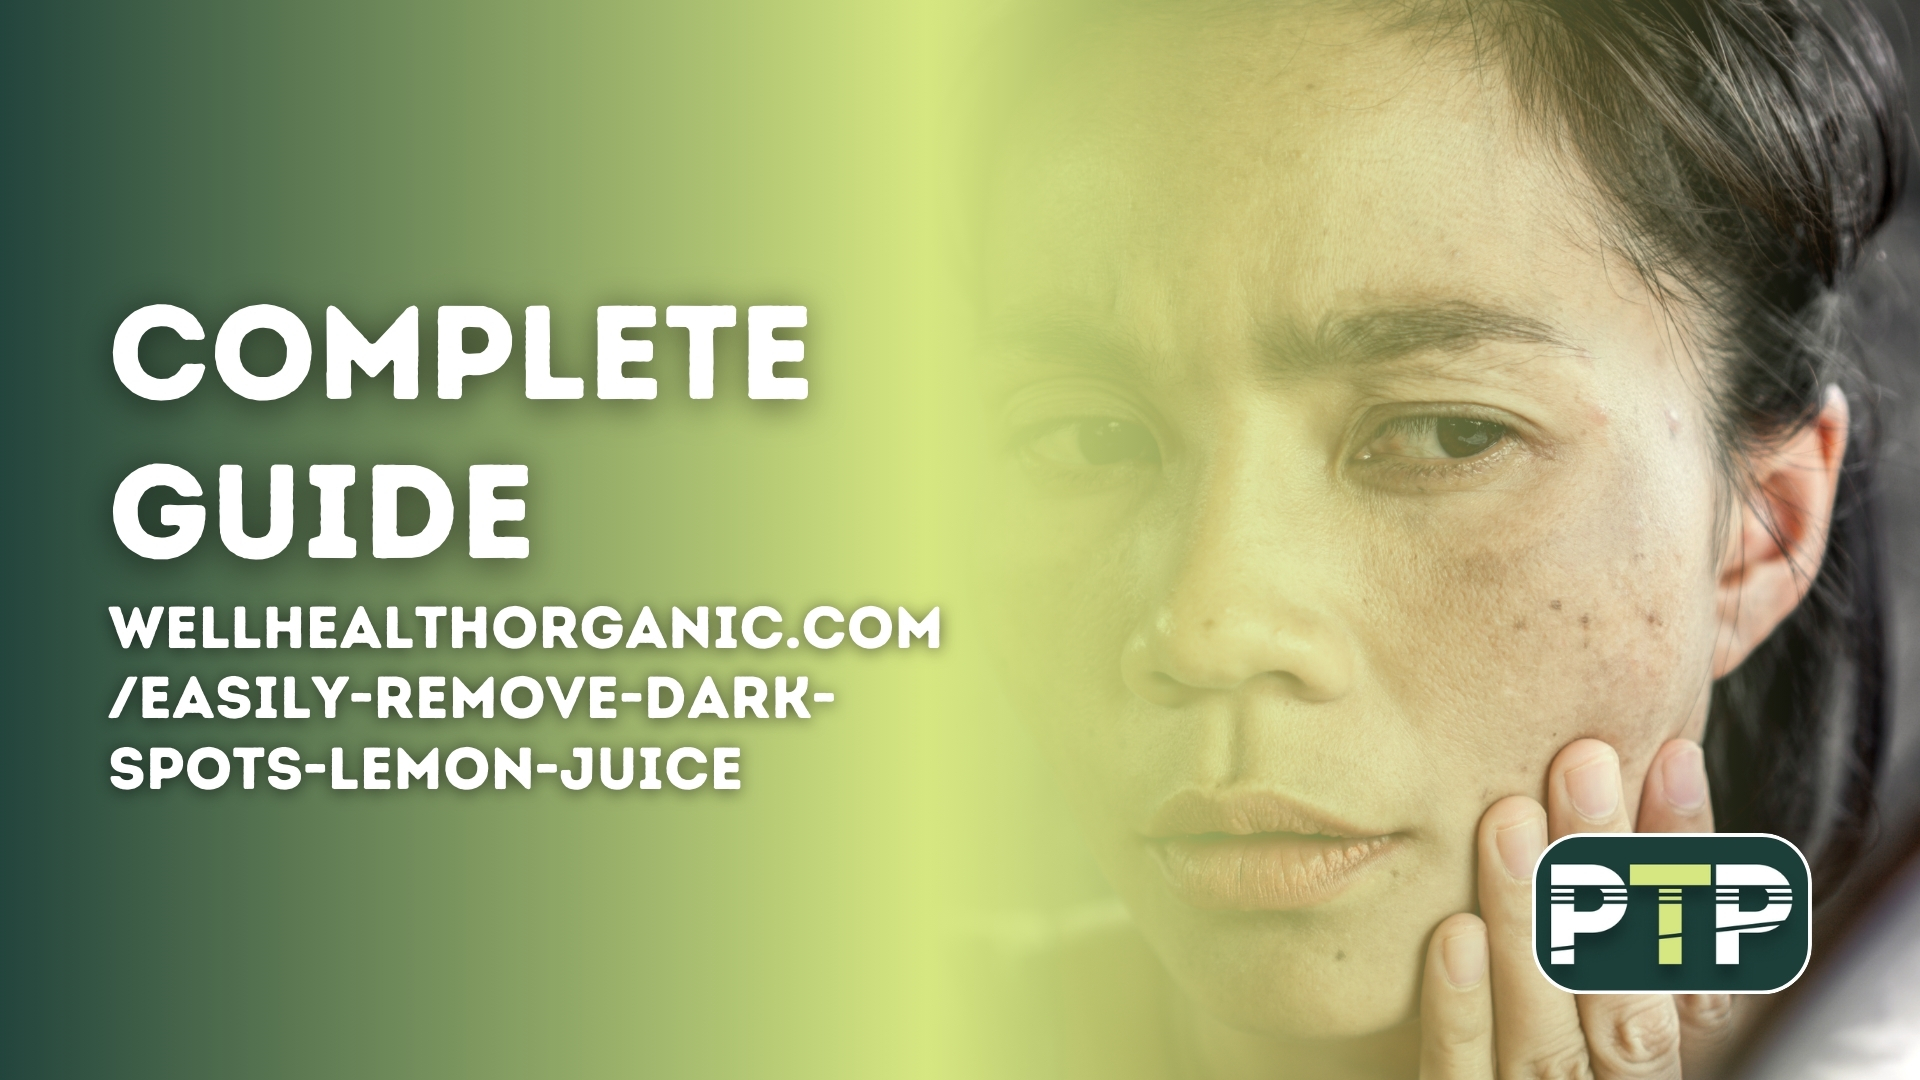 wellhealthorganic.com/easily-remove-dark-spots-lemon-juice with Complete Guide